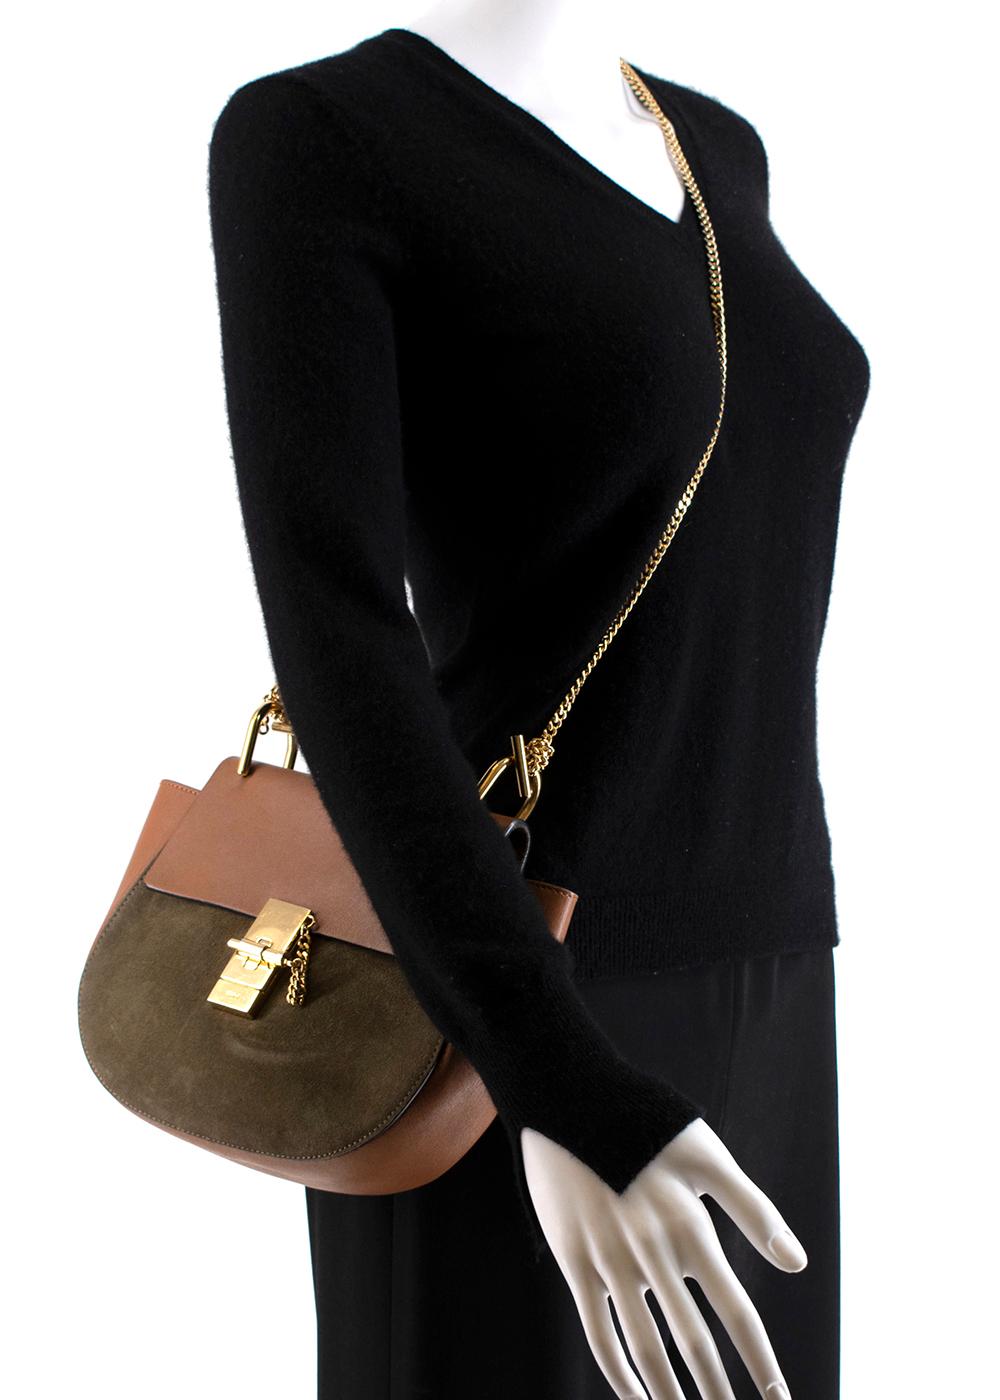 Brown Chloe Tan/Khaki 'Drew' Suede & Leather Shoulder Bag For Sale